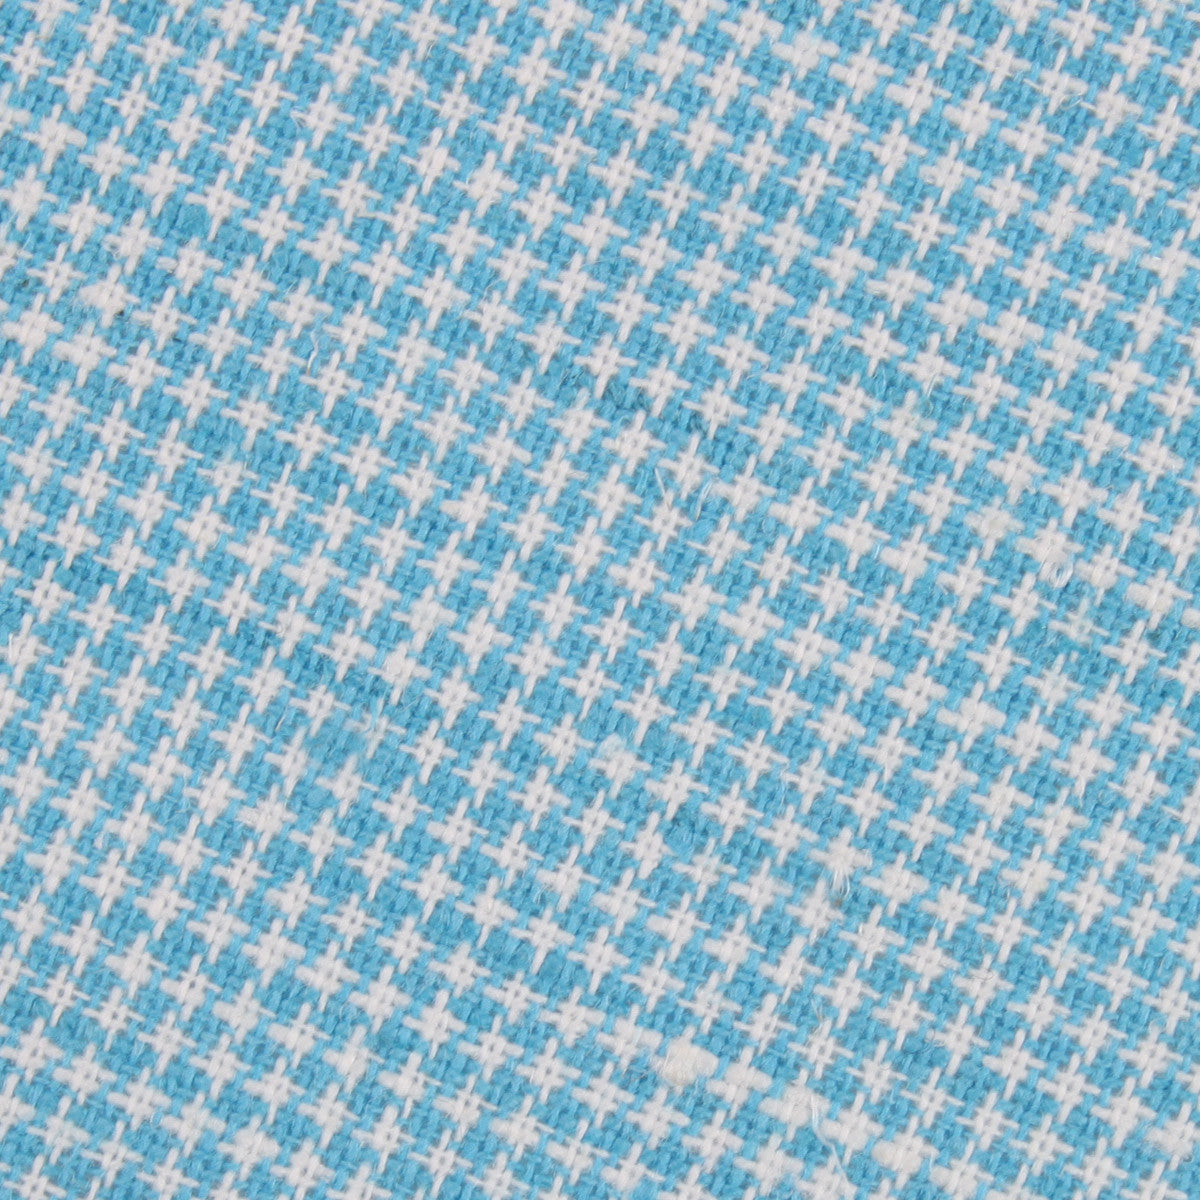 Blue Joy Houndstooth Linen Fabric Skinny Tie